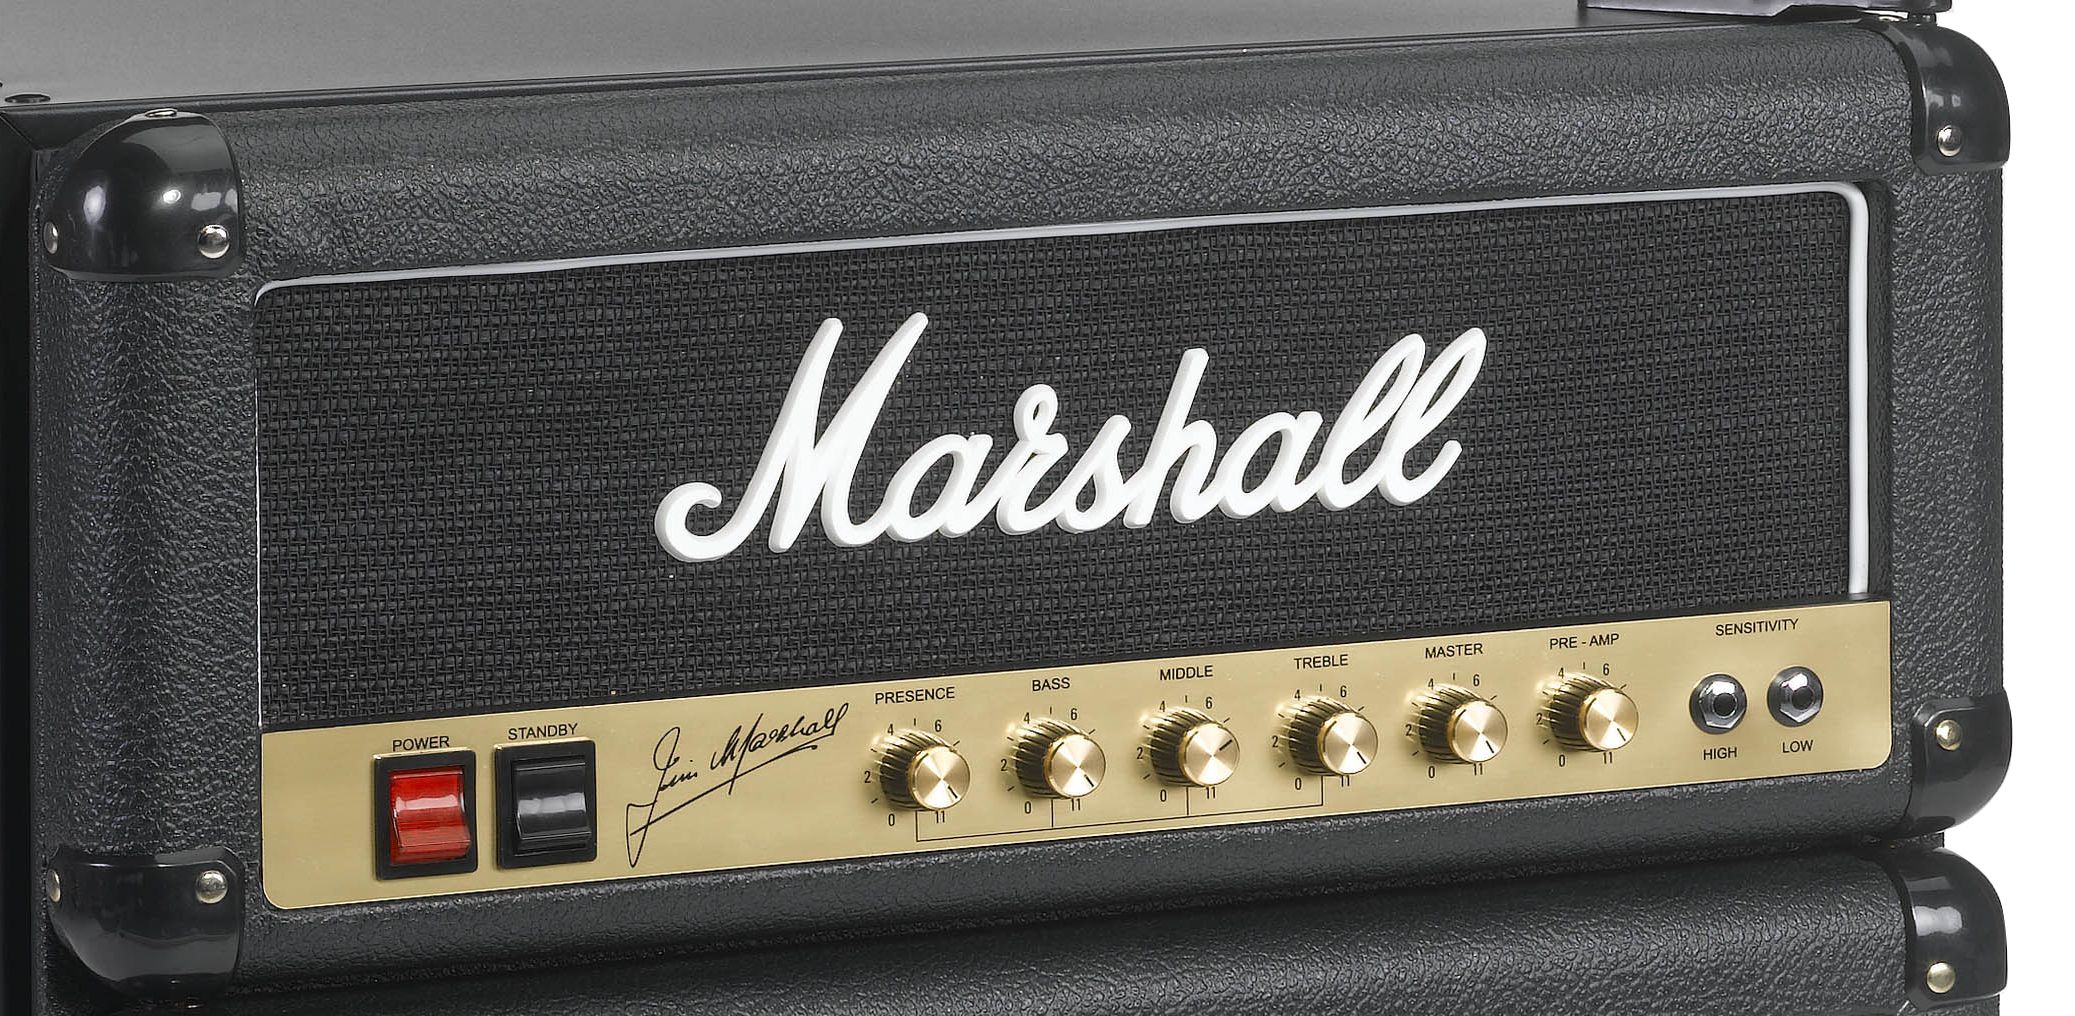 Marshall 4.4 Cu. Ft. Mini Fridge Black With Brass And White Accents  MF-110-NA-U - Best Buy